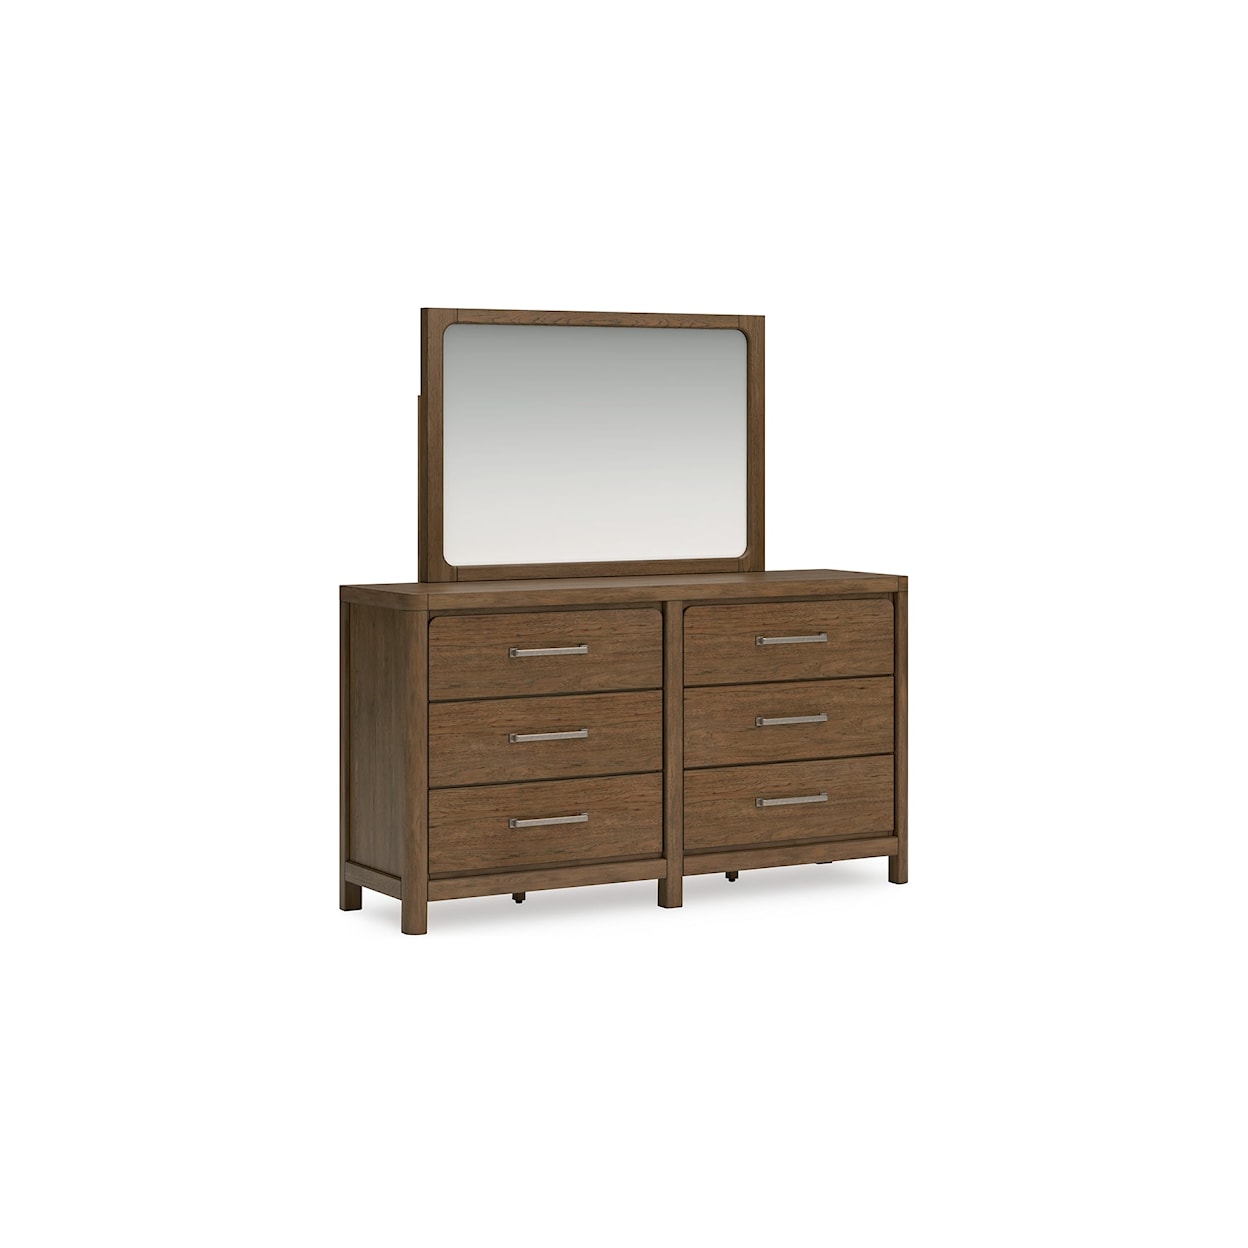 Benchcraft Cabalynn Dresser and Mirror Set